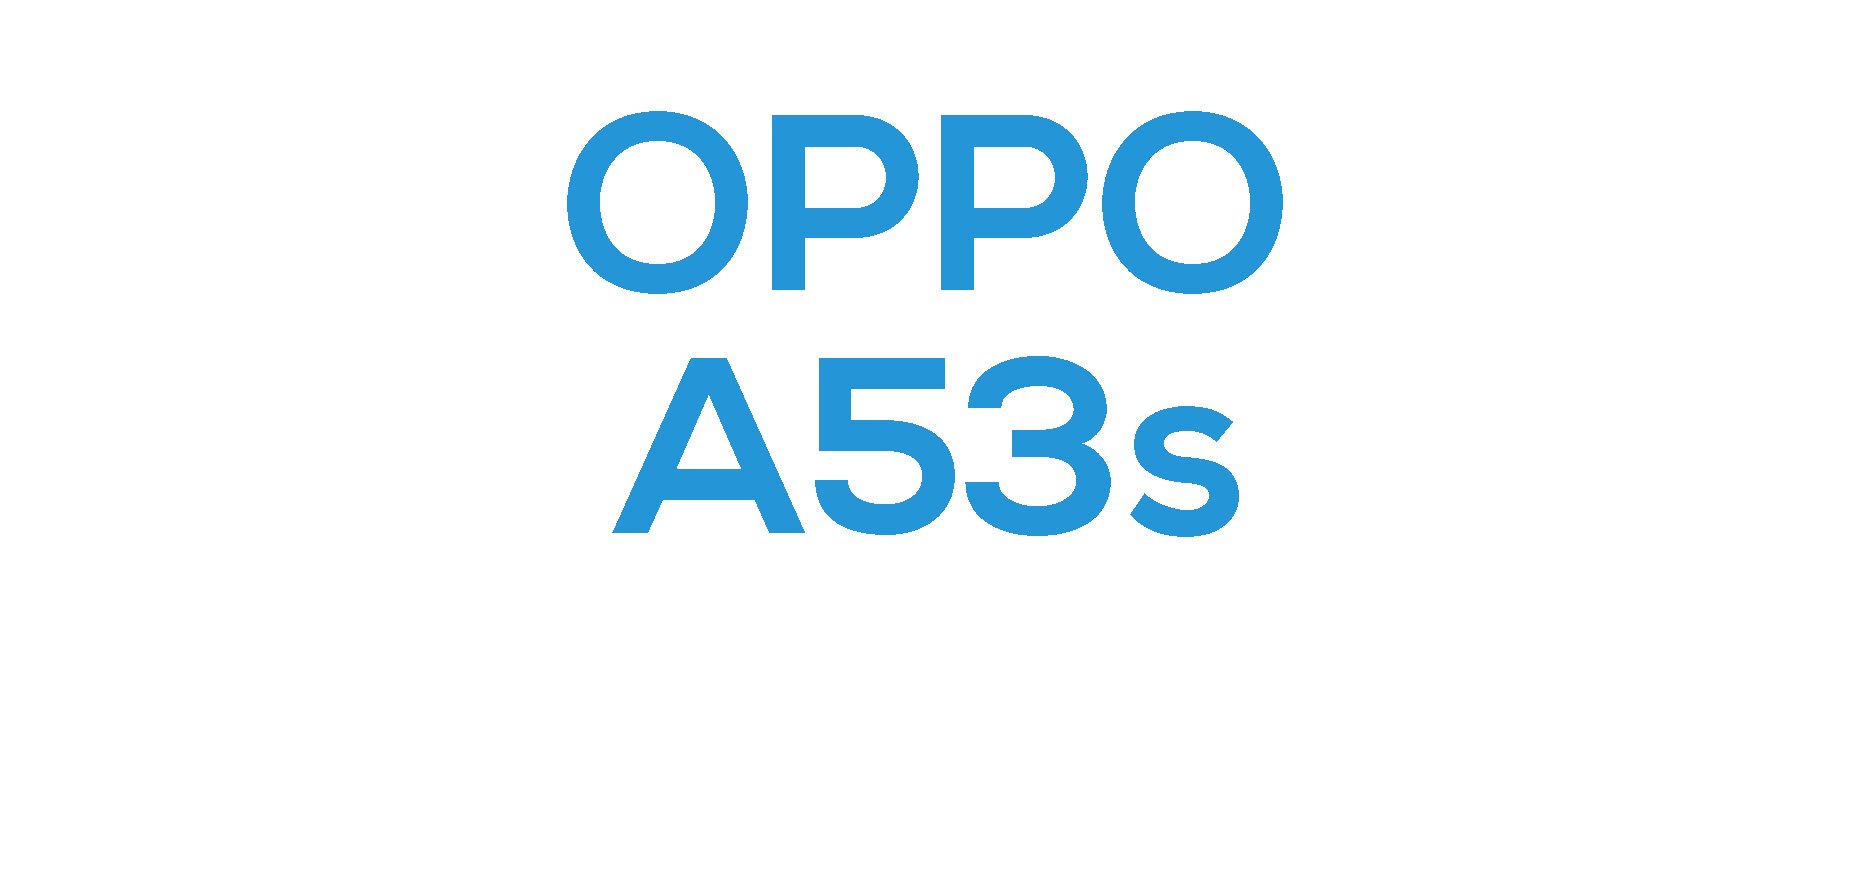 OPPO A53s